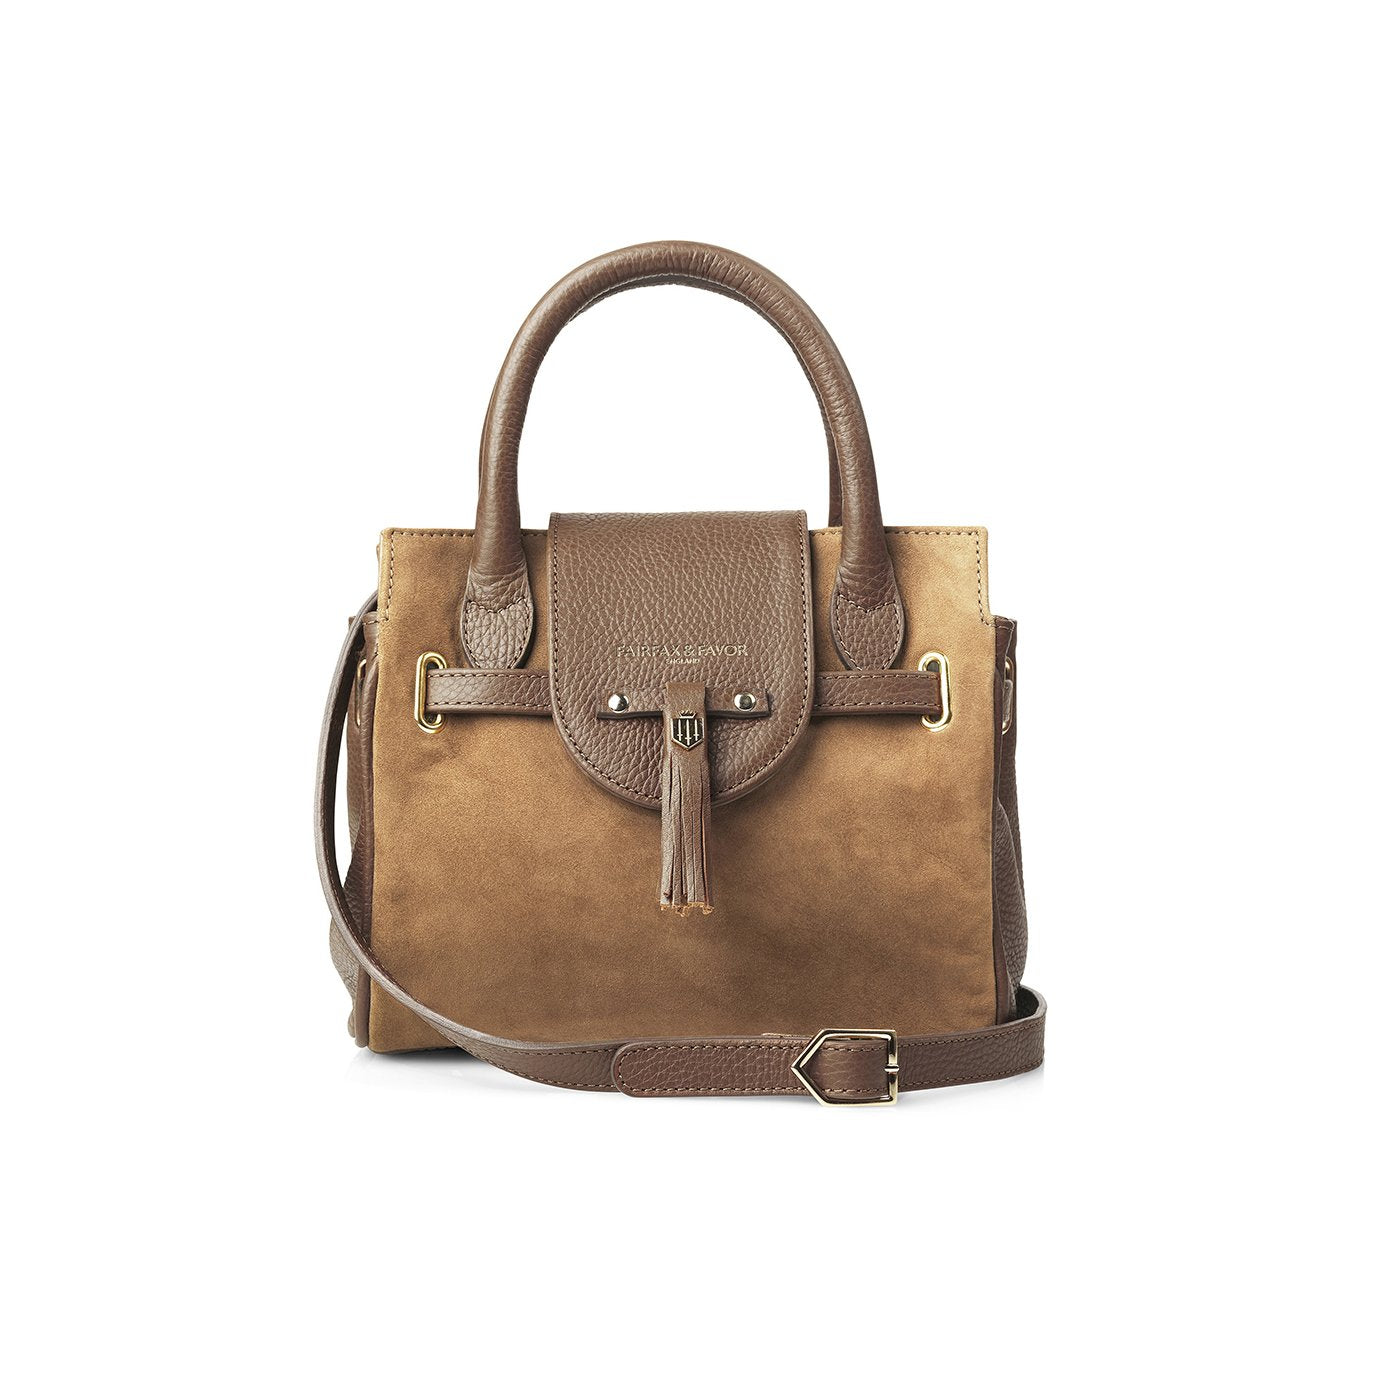 Fairfax & Favor Ladies Mini Windsor Handbag